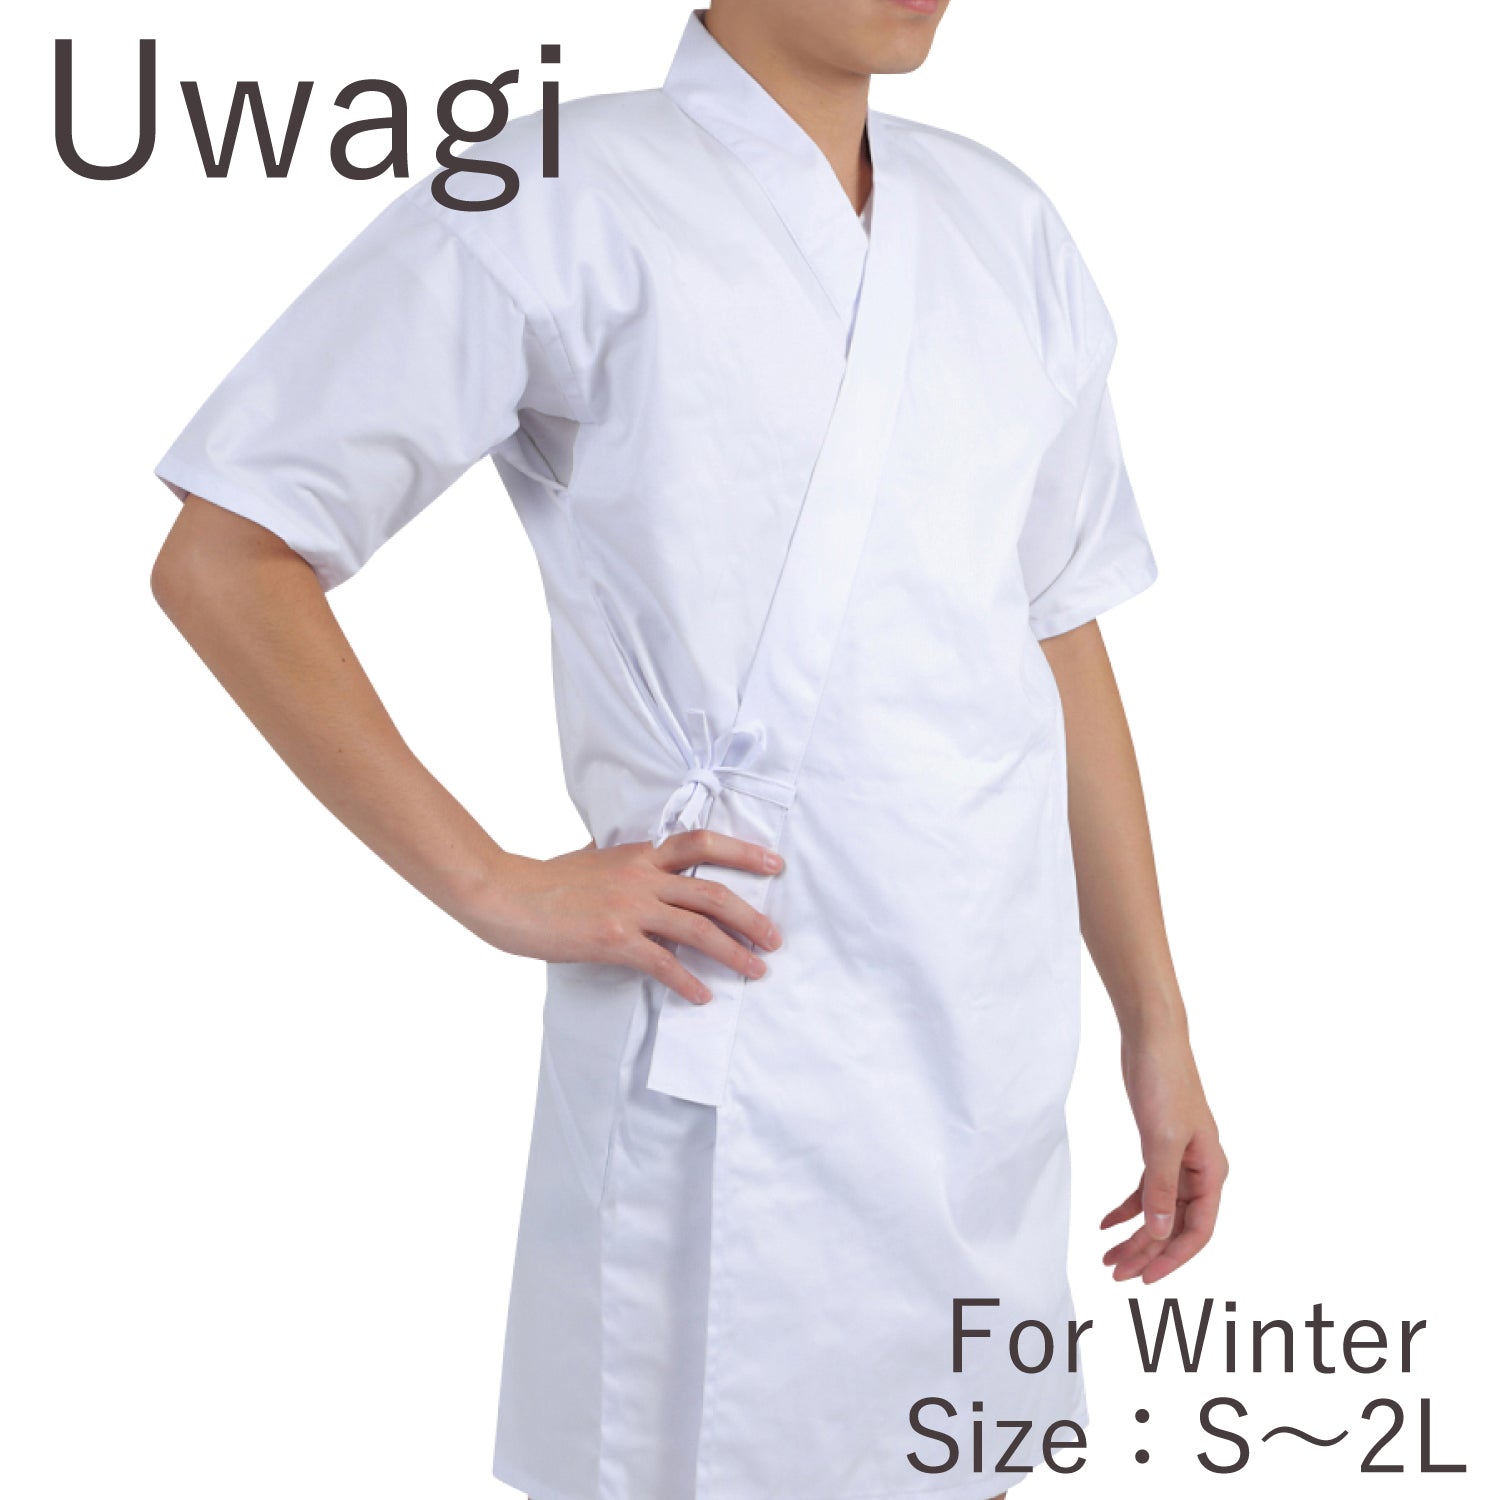 【H-205】 Uwagi - For winter Size：S - 2L 冬用ネル付き上着 S - 2L